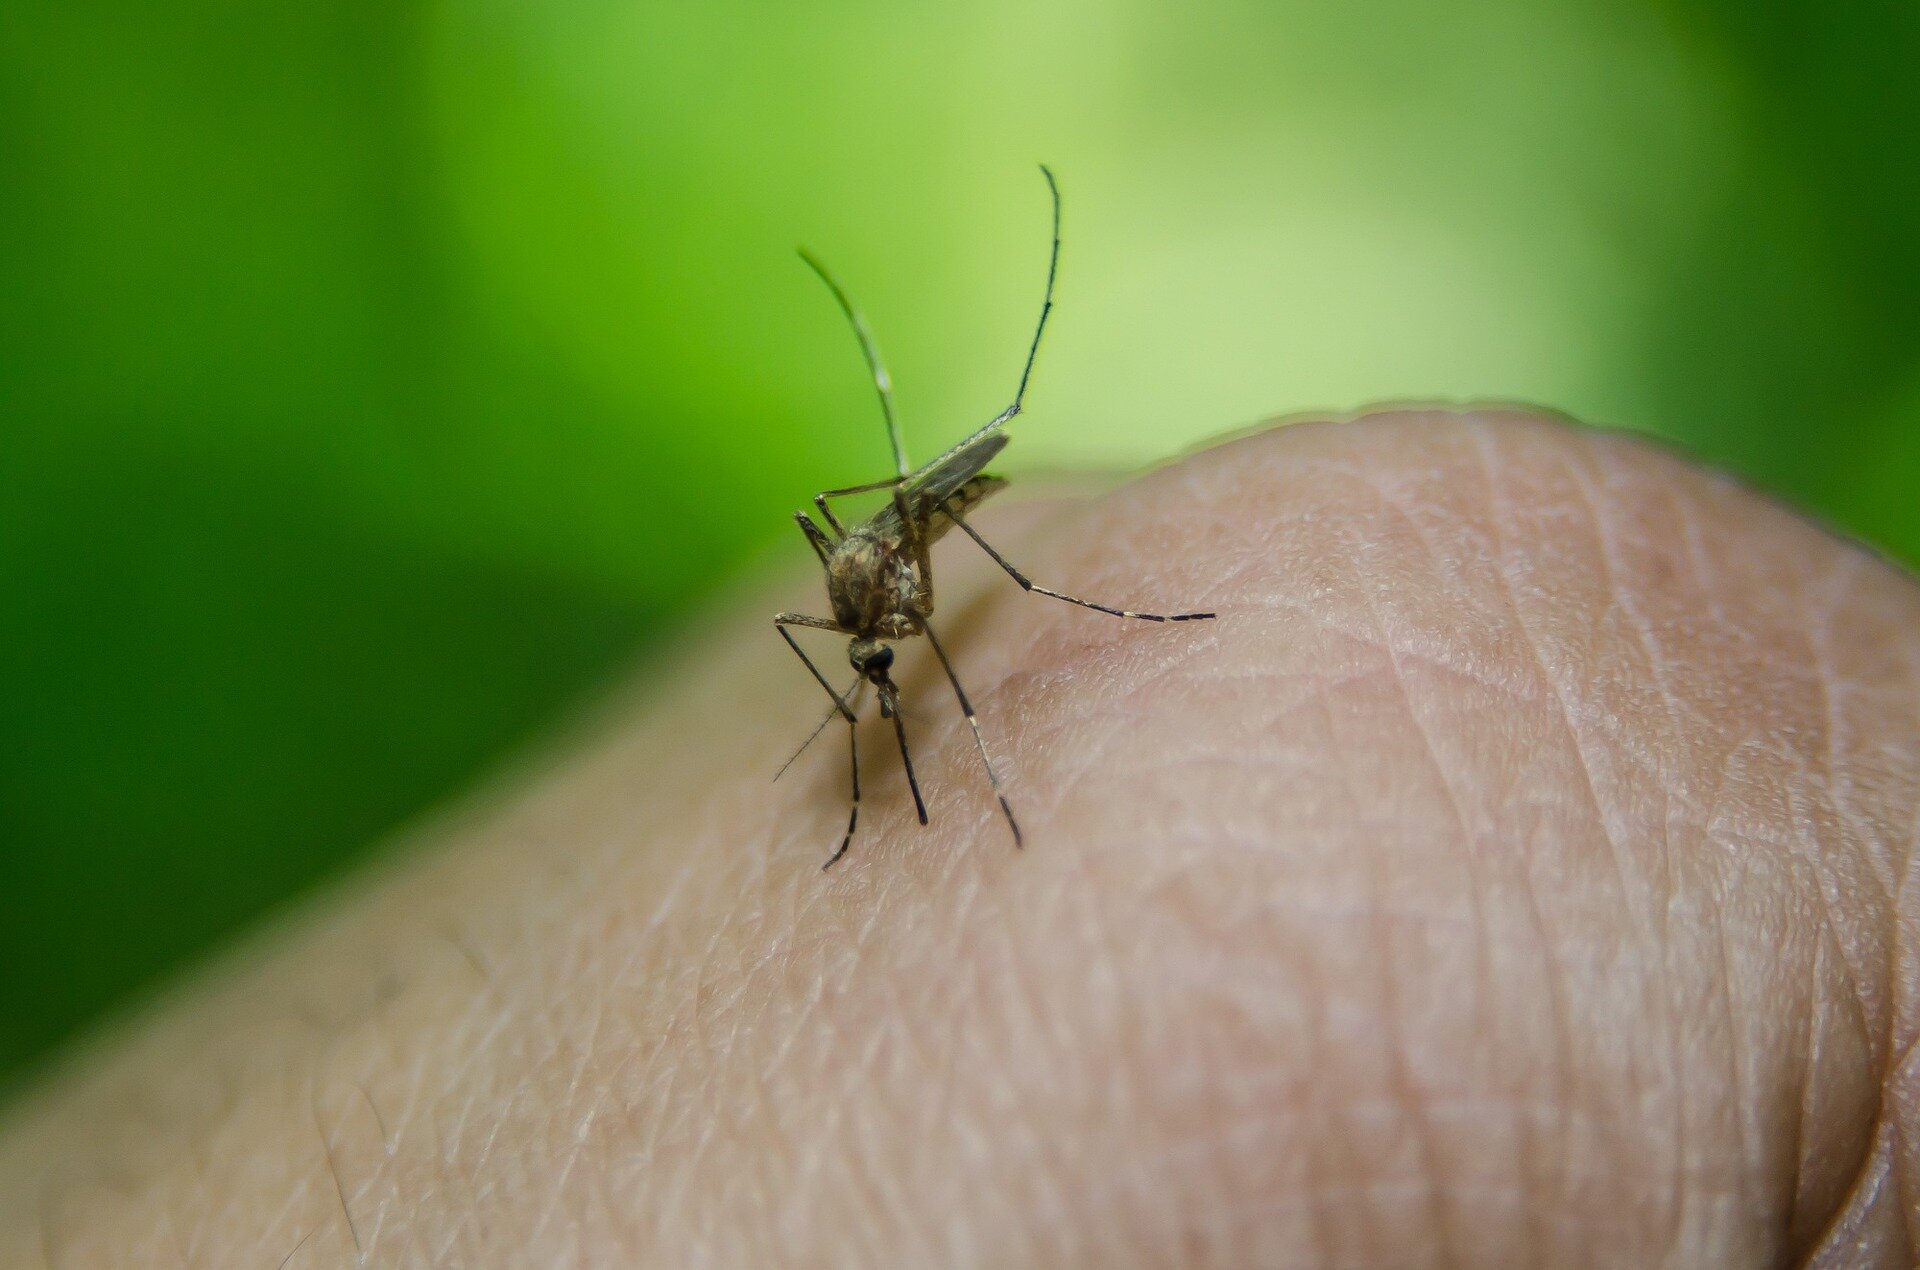 Epidemia de malaria golpea la costa este de Costa Rica